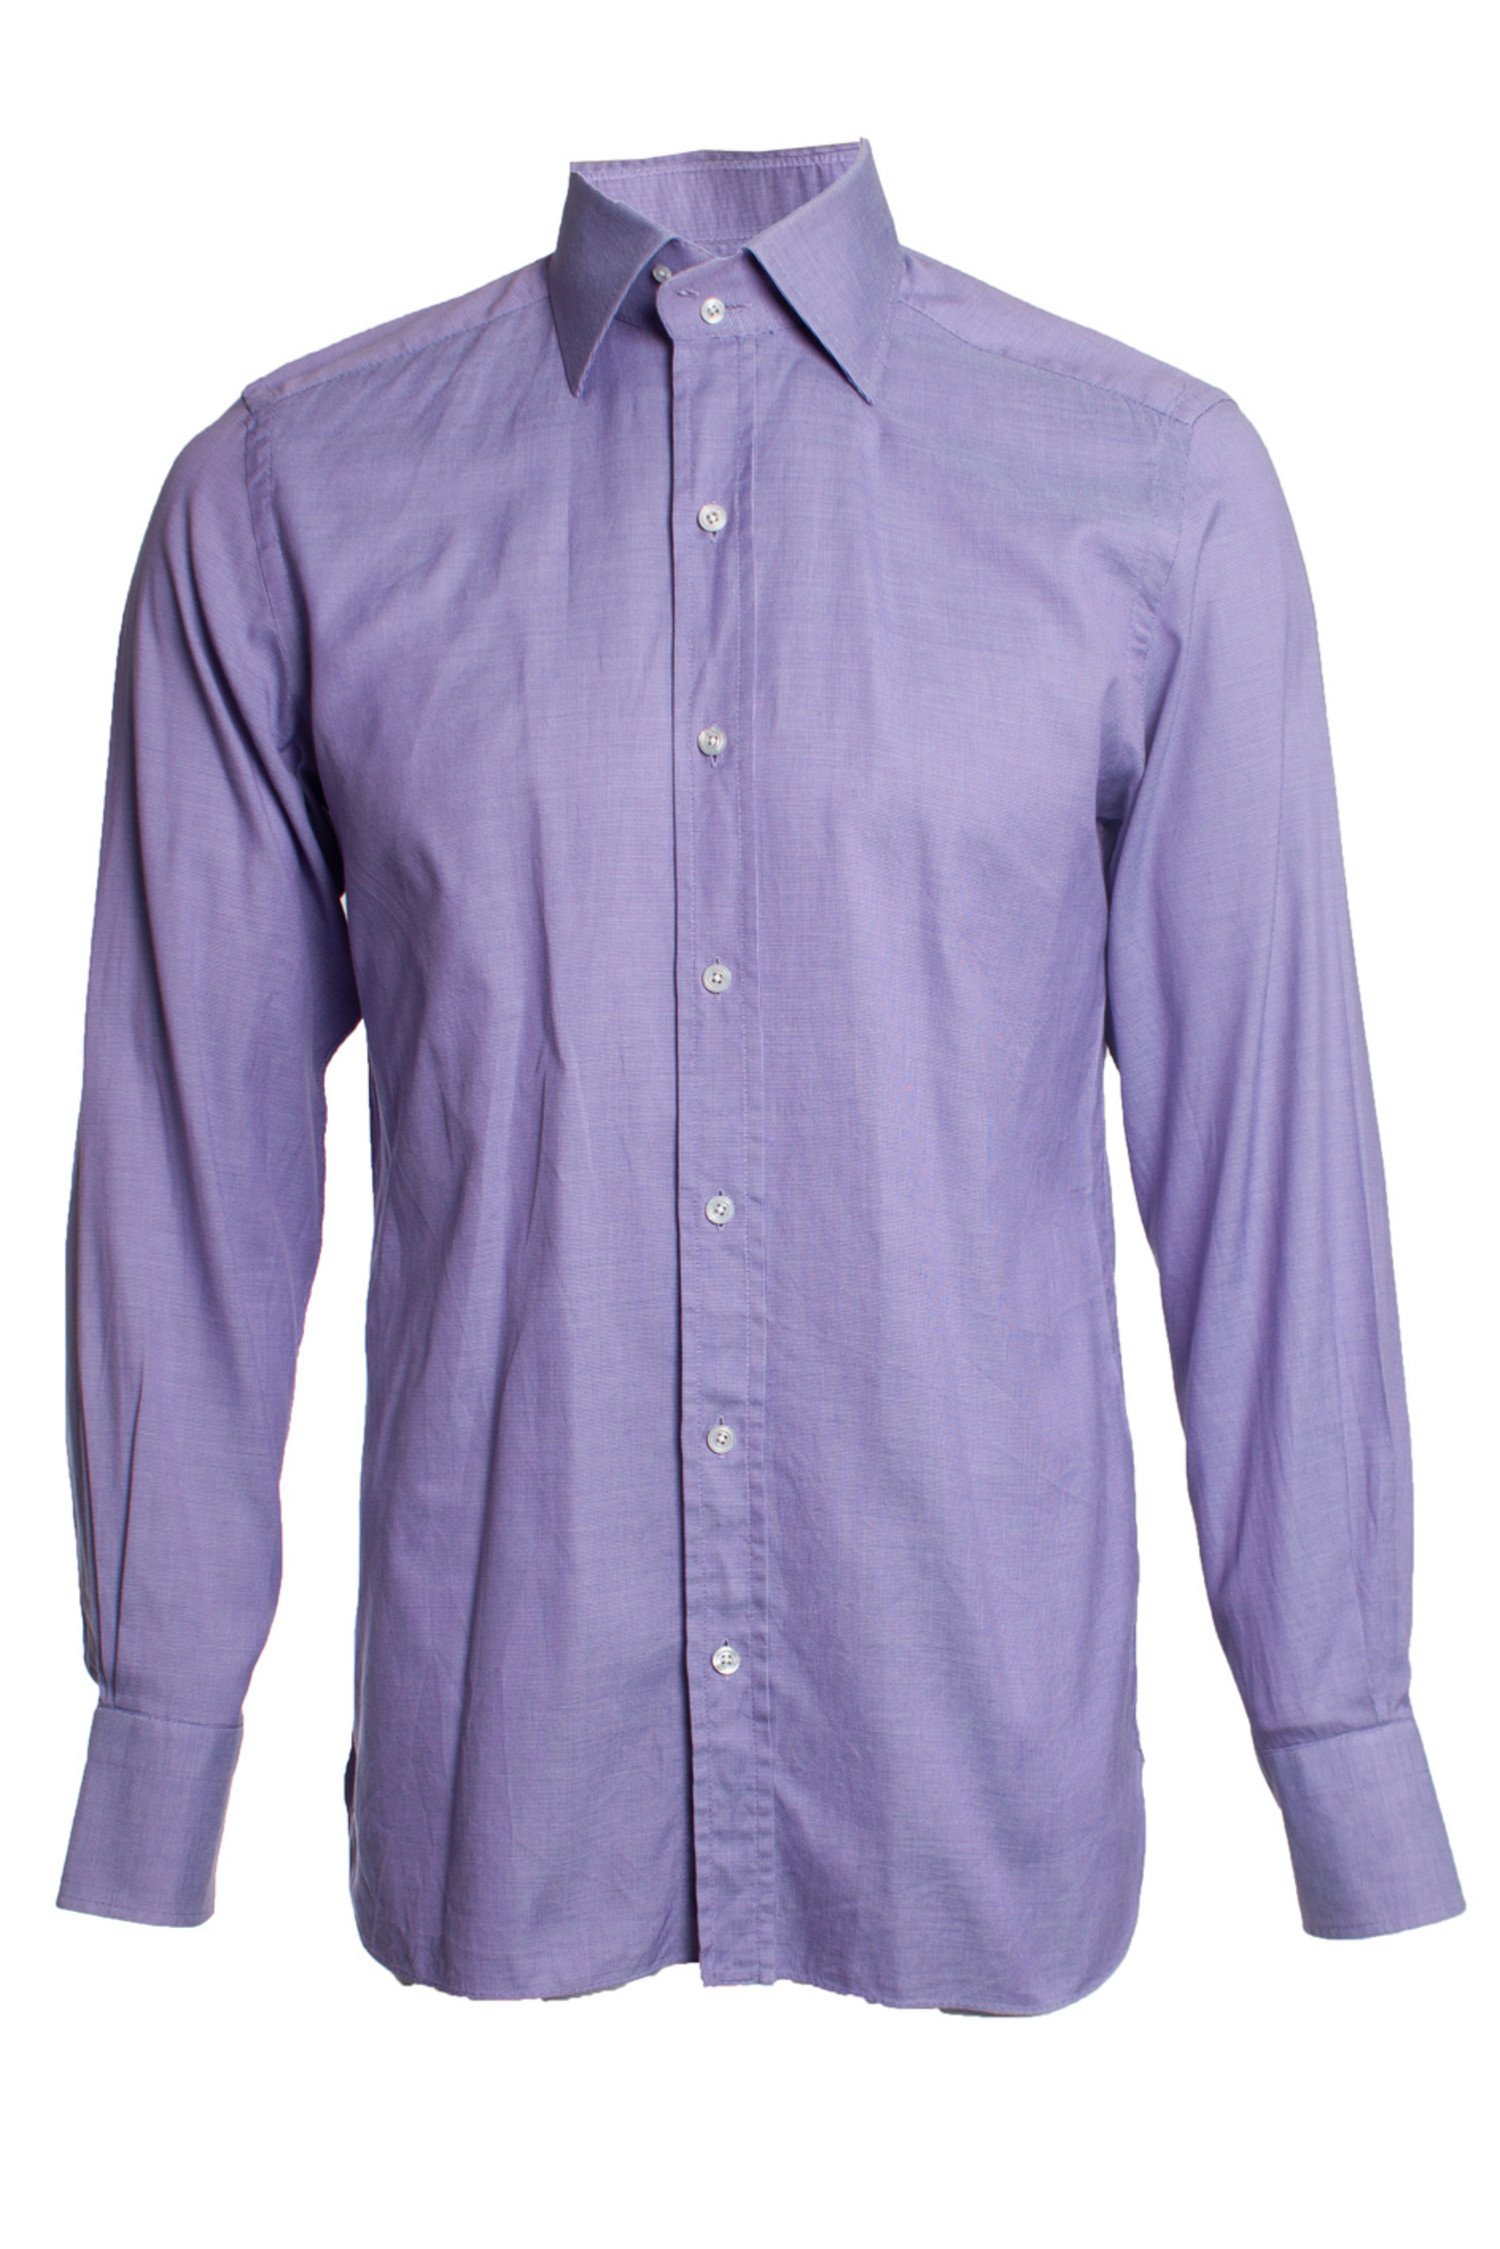 Tom Ford, Purple shirt - Unique Designer Pieces